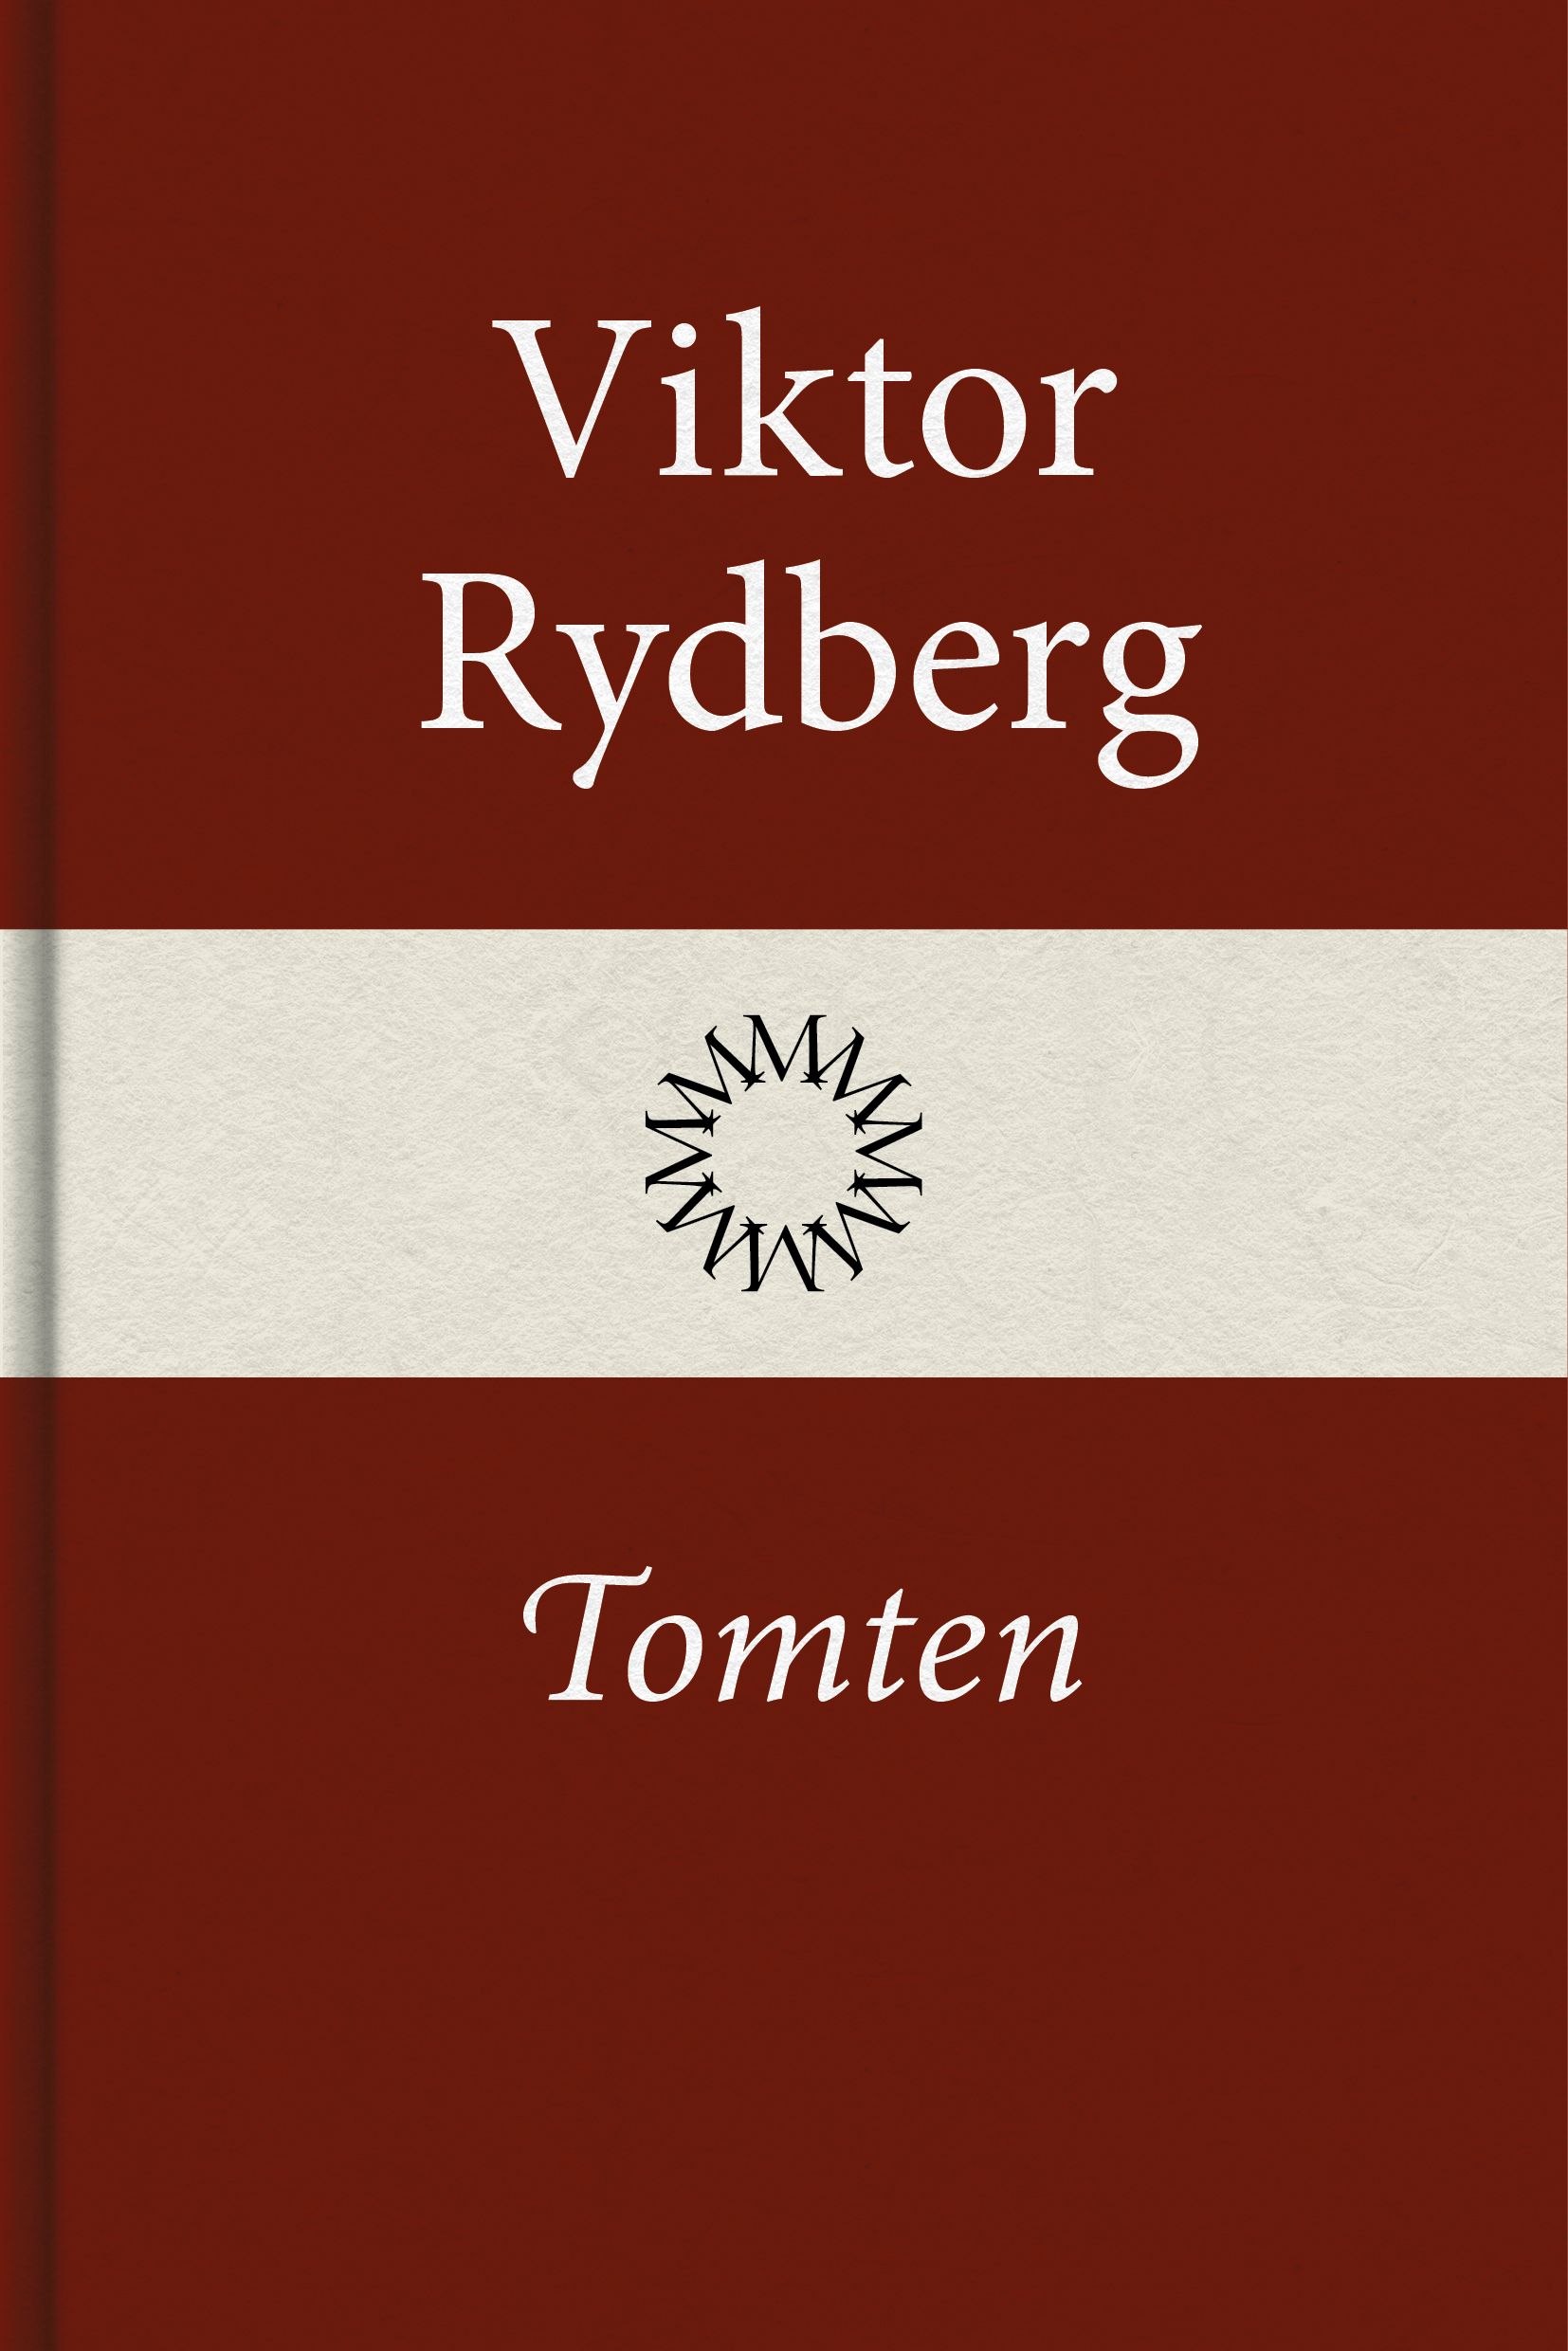 Tomten, eBook by Viktor Rydberg